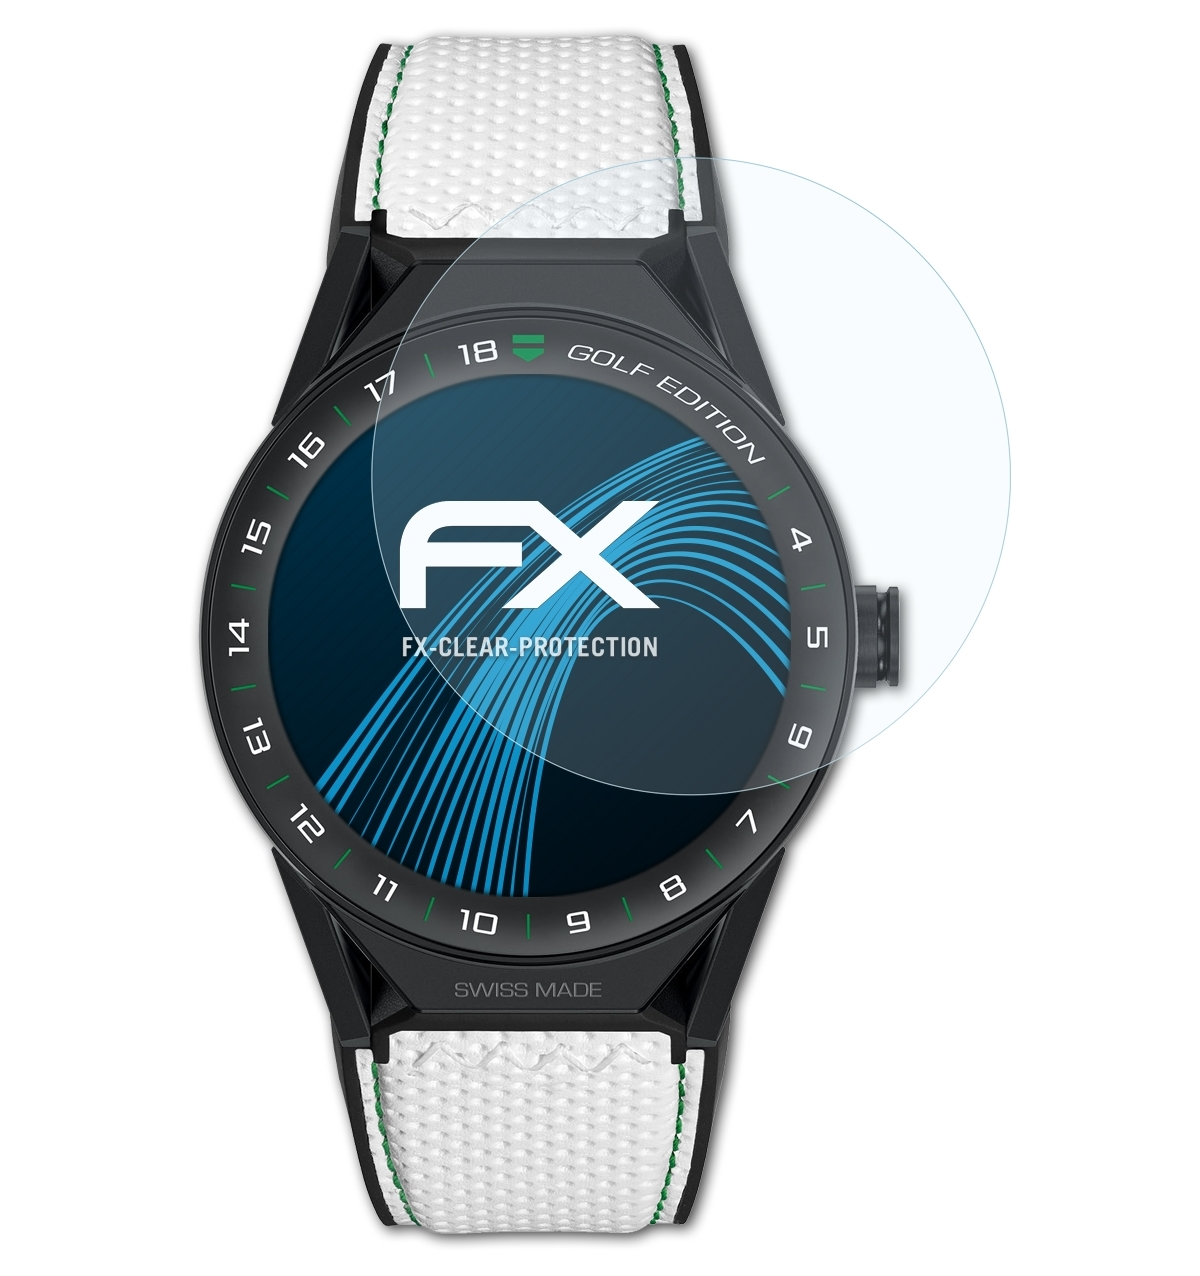 ATFOLIX 3x FX-Clear Edition) 45 Heuer Modular Connected Displayschutz(für TAG Golf